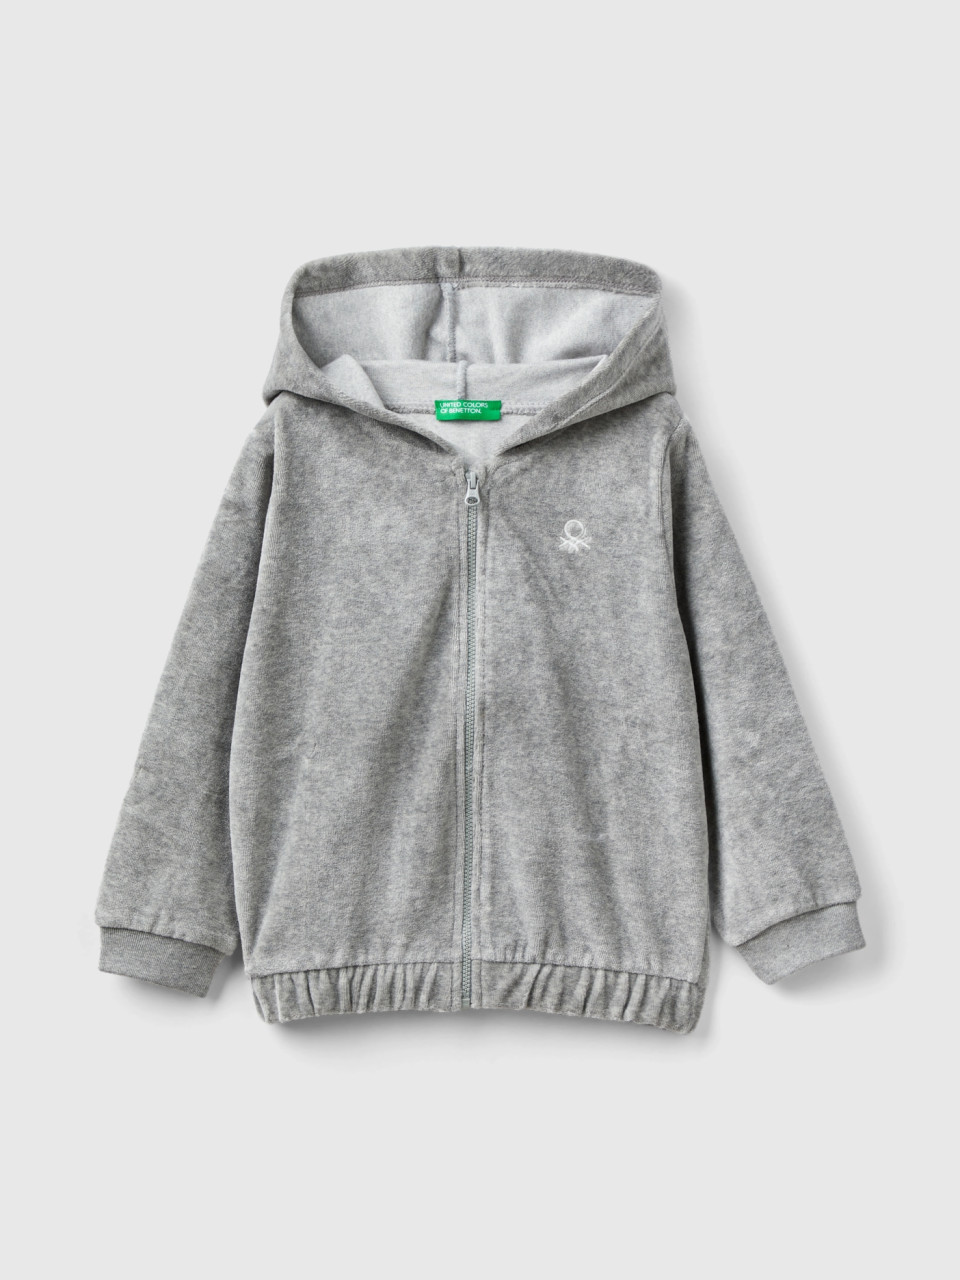 Benetton, Chenille Sweatshirt With Zip And Hood, Light Gray, Kids